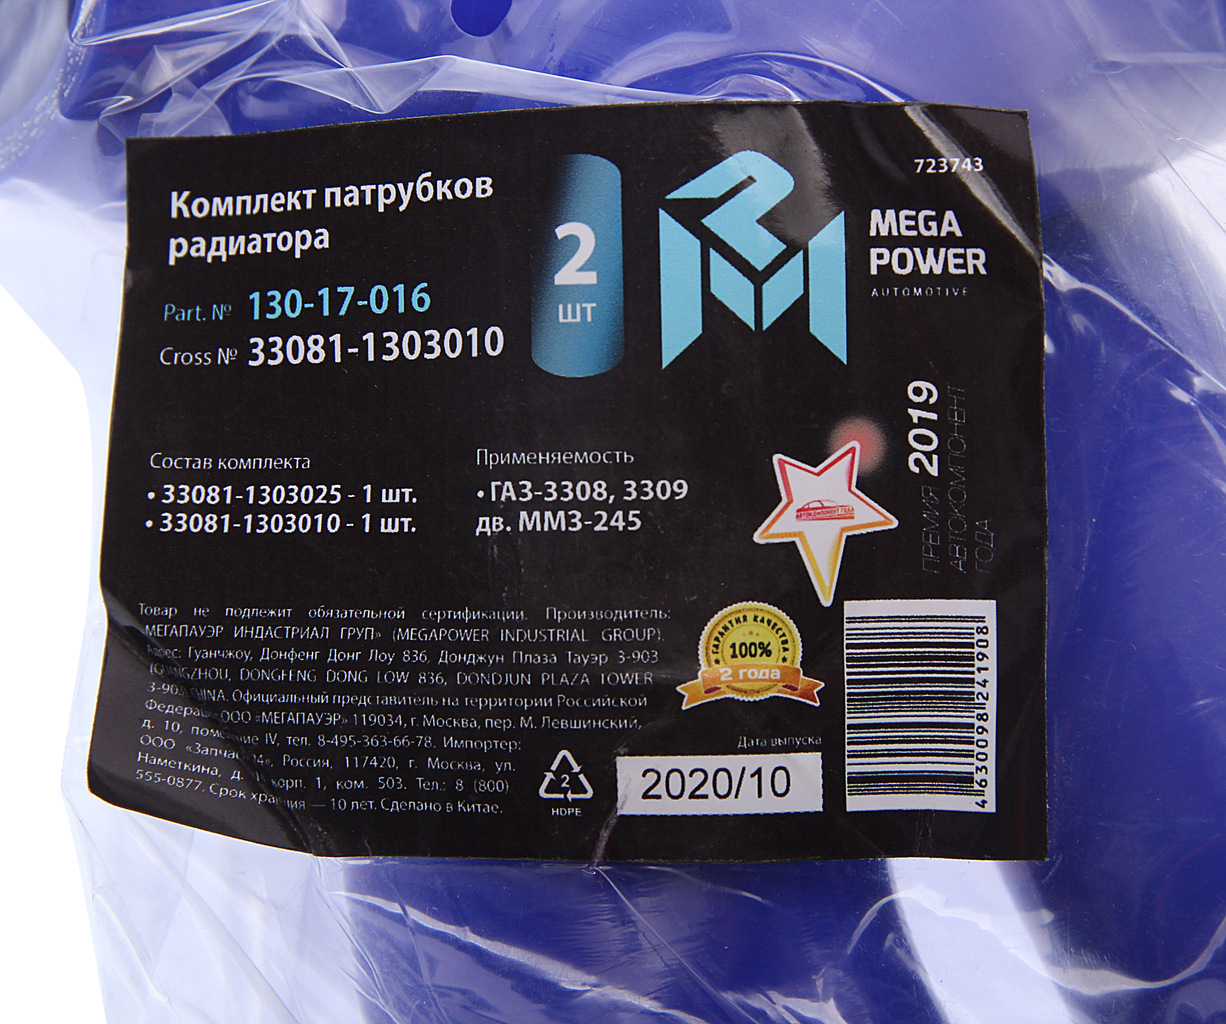 Патрубок ГАЗ-3308,3309 дв.ММЗ-245 радиатора комплект 2шт. синий силикон, 130-17-016, MEGAPOWER